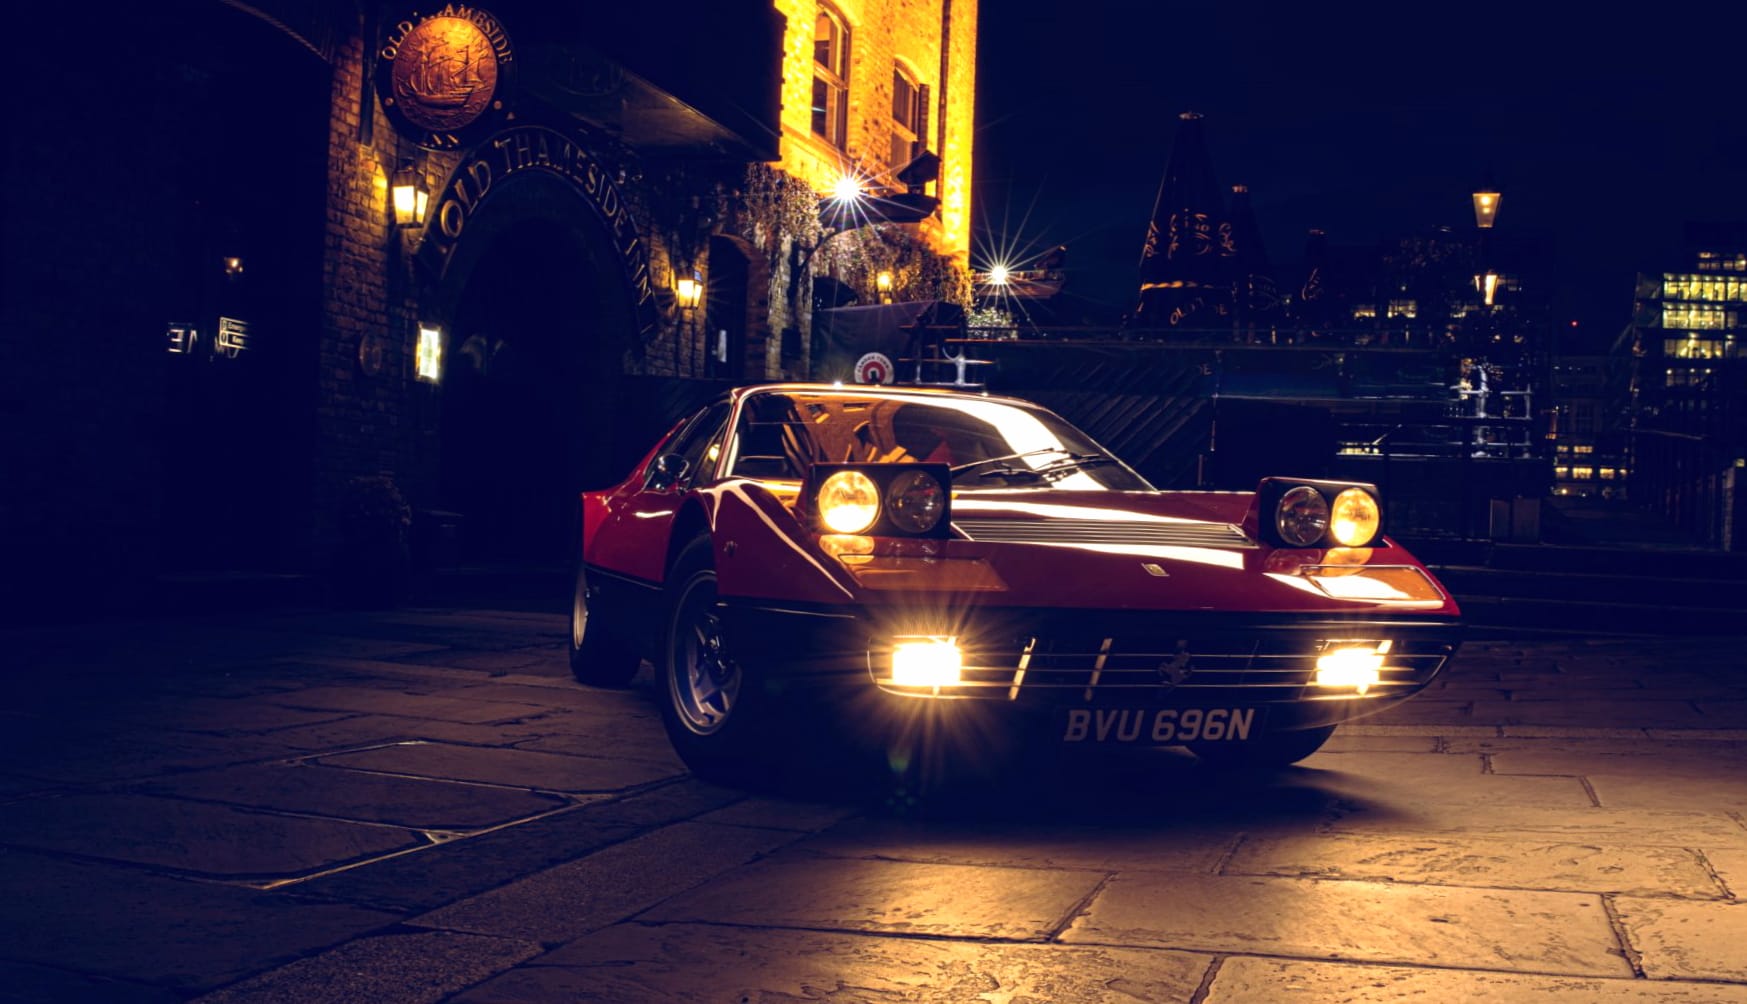 Ferrari Berlinetta Boxer at 1280 x 960 size wallpapers HD quality